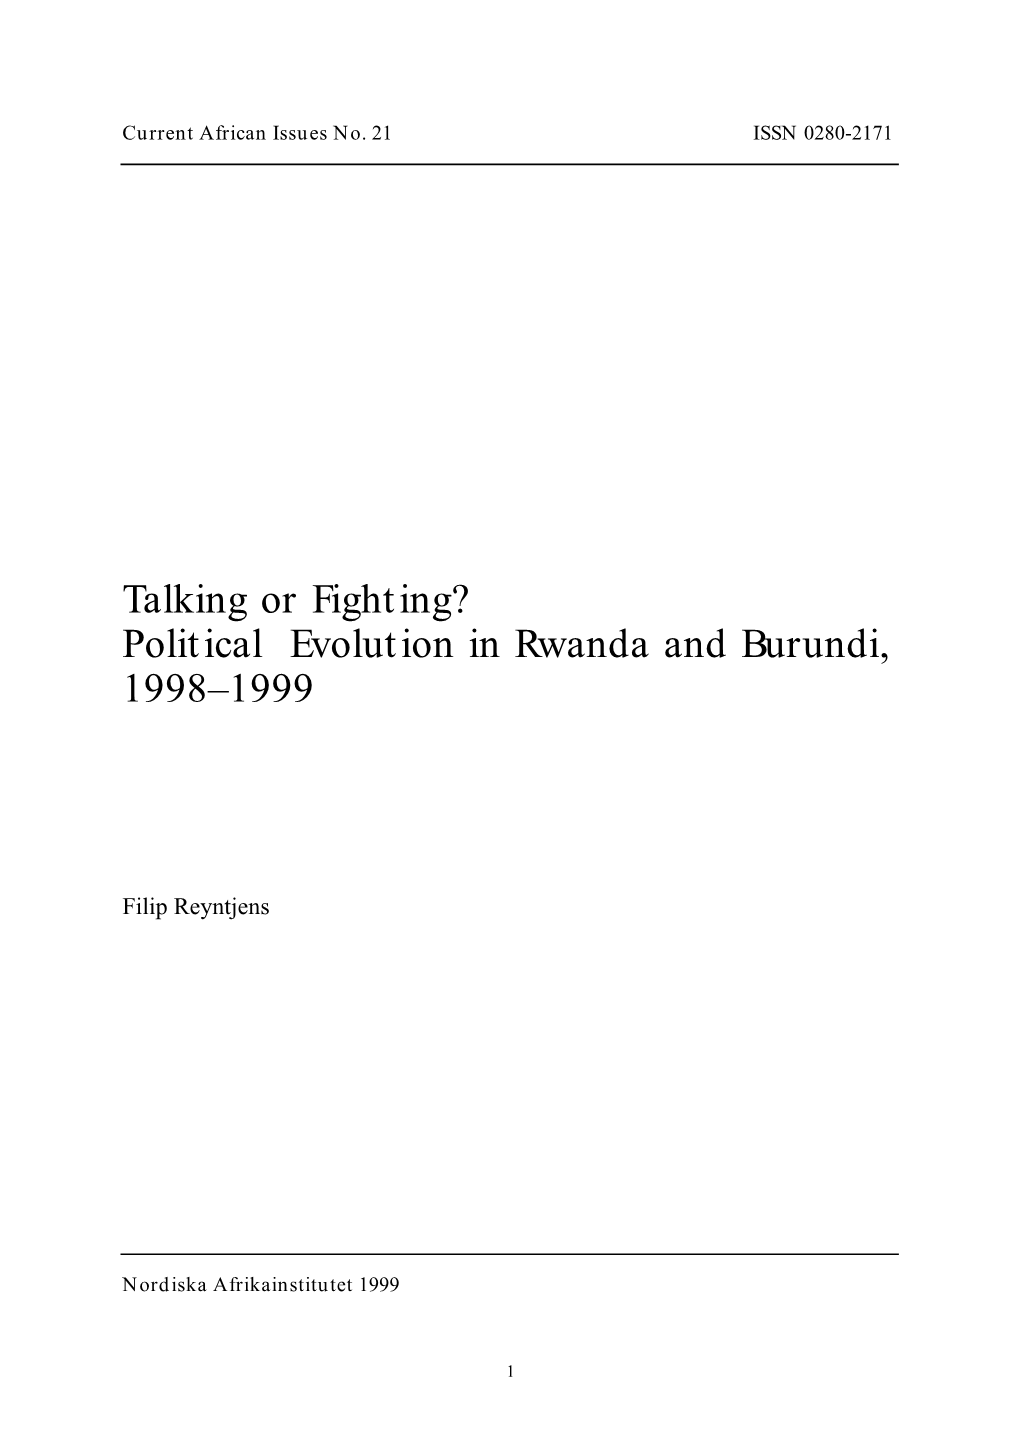 Talking Or Fighting? Political Evolution in Rwanda and Burundi, 1998-1999